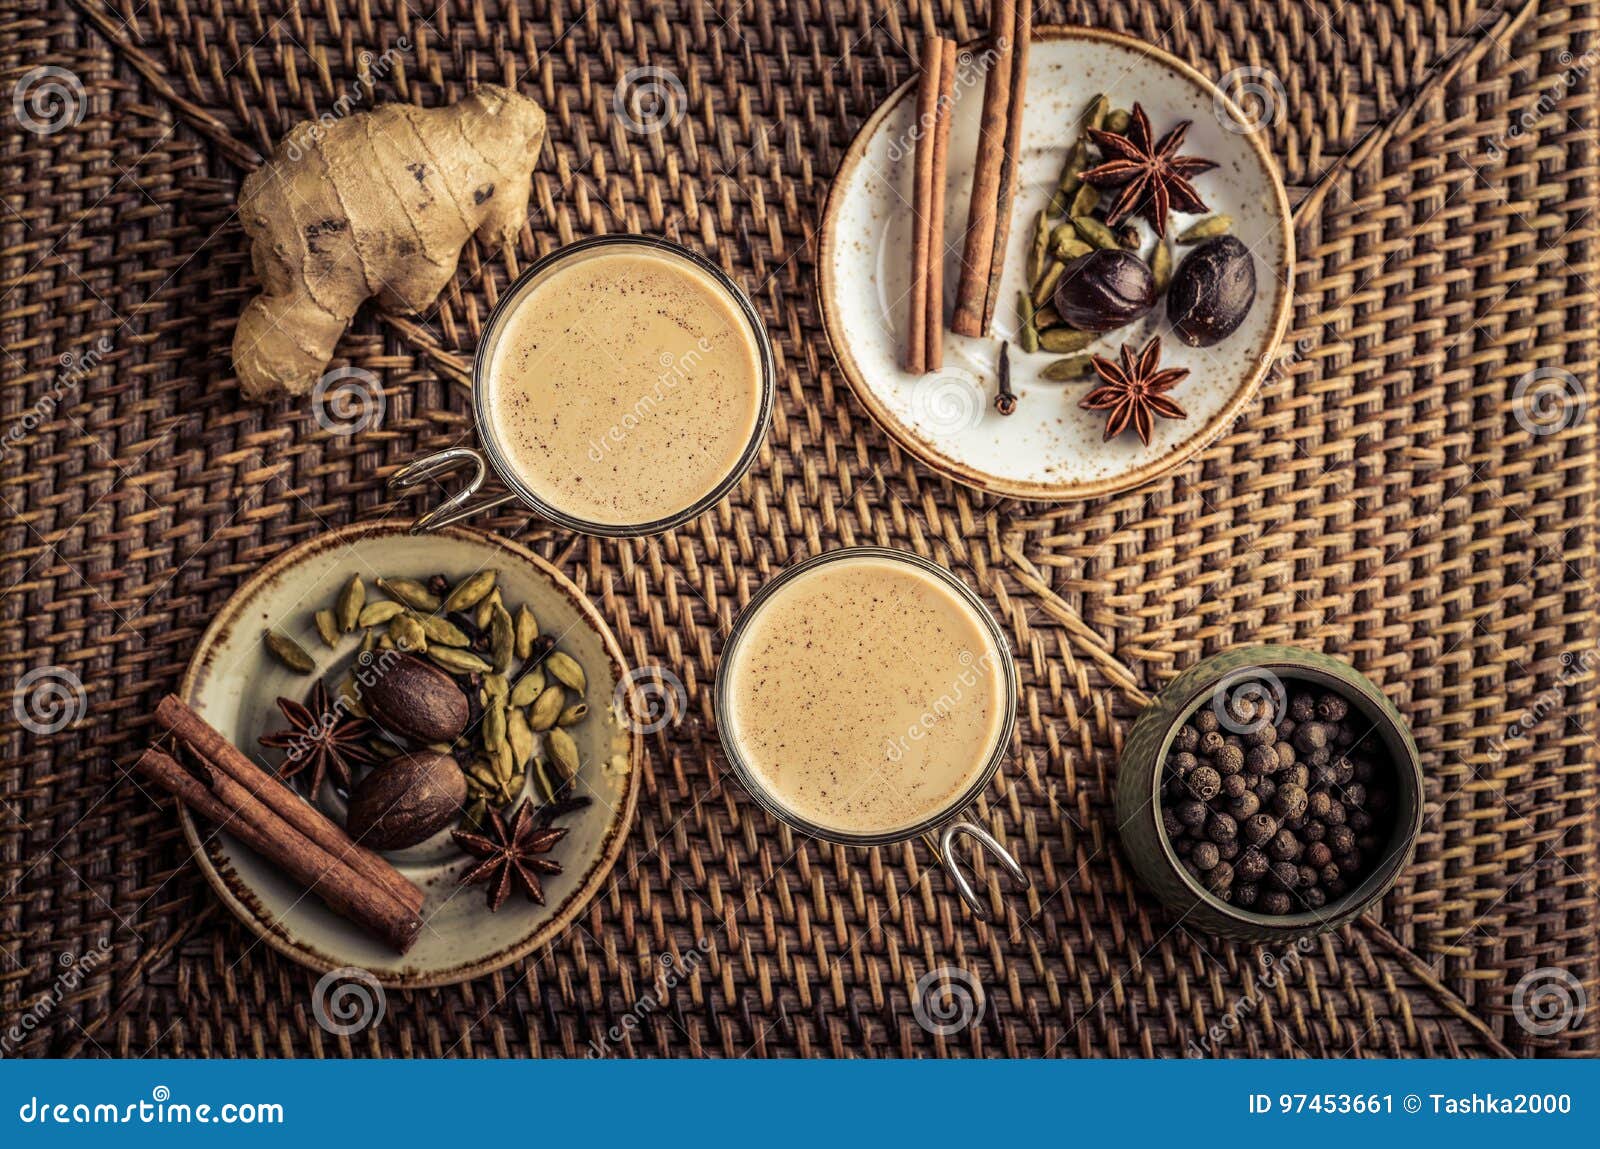 Masala chai tea stock image. Image of masala, cinnamon - 97453661